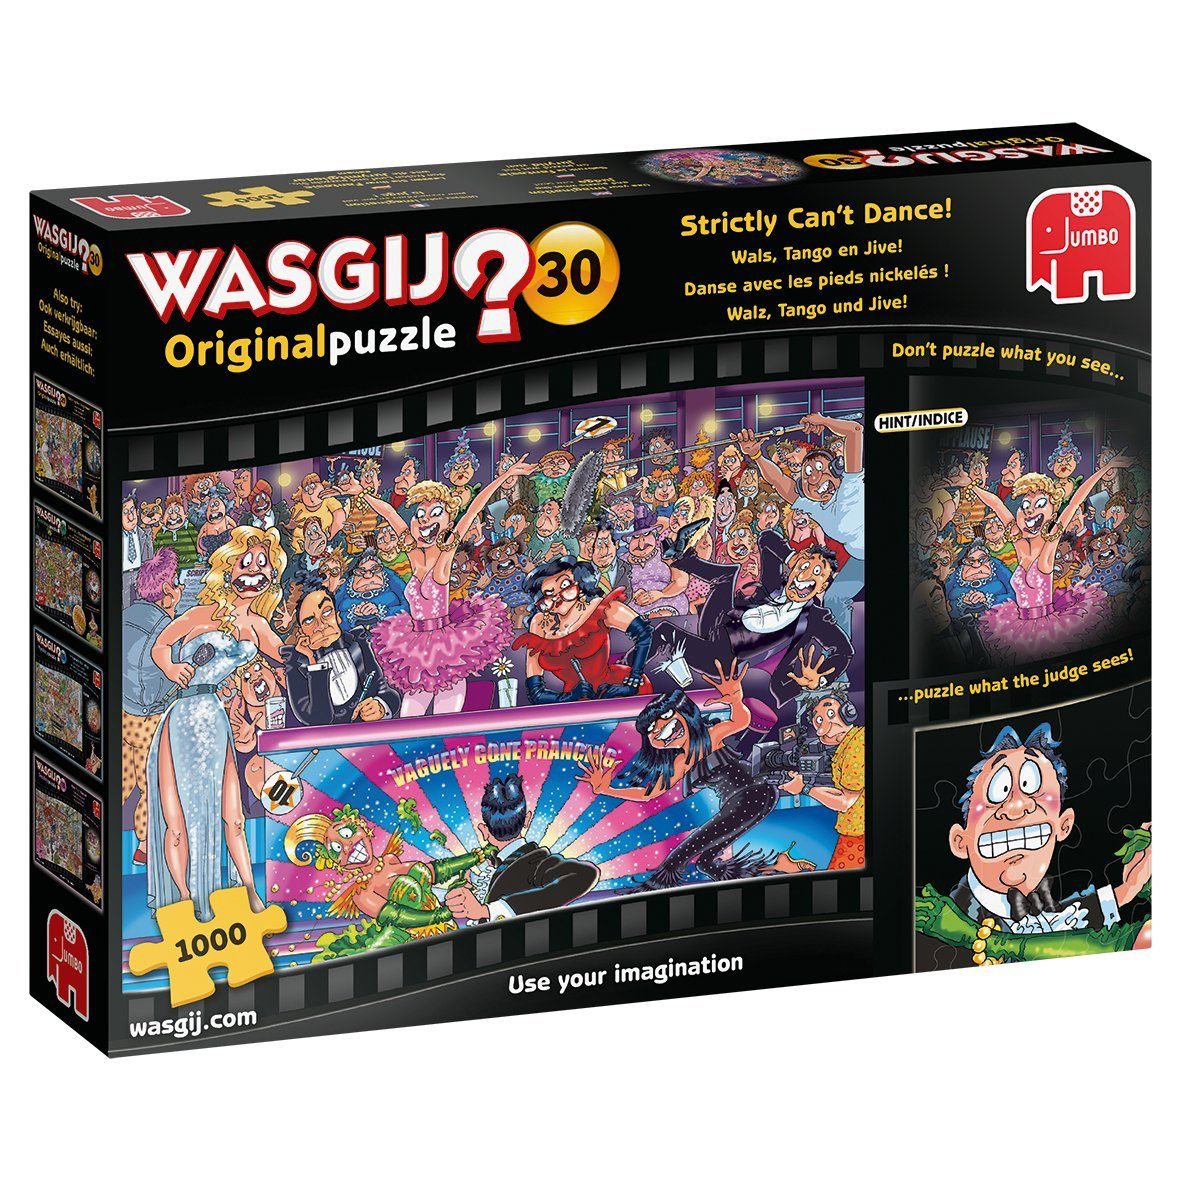 Jumbo Spiele Puzzle 19160 Wasgij Original 30 Walz,Tango und Jive, 1000 Puzzleteile